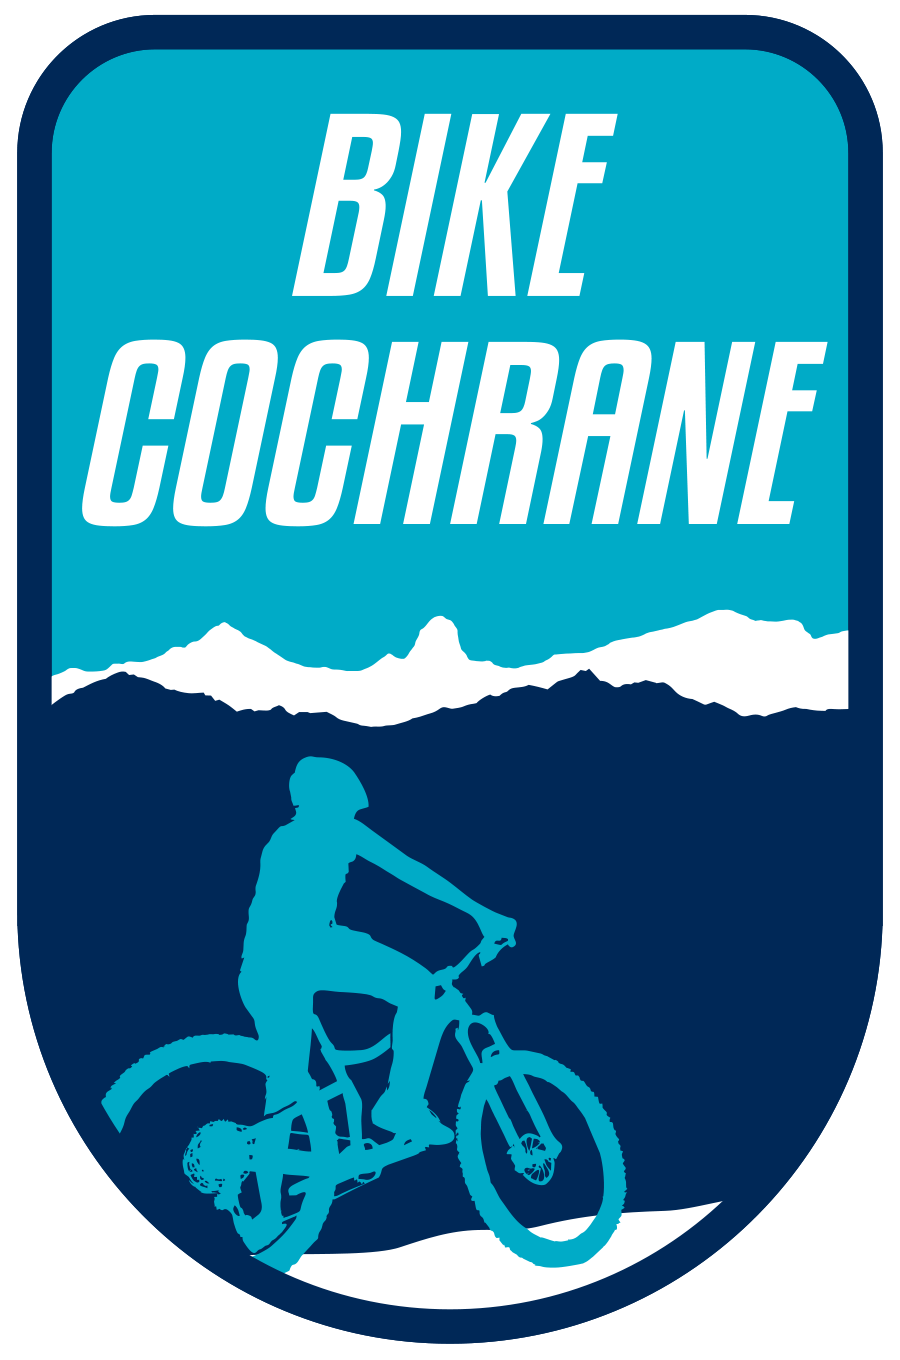 Bike Cochrane front page in Cochrane Eagle! — Bike Cochrane